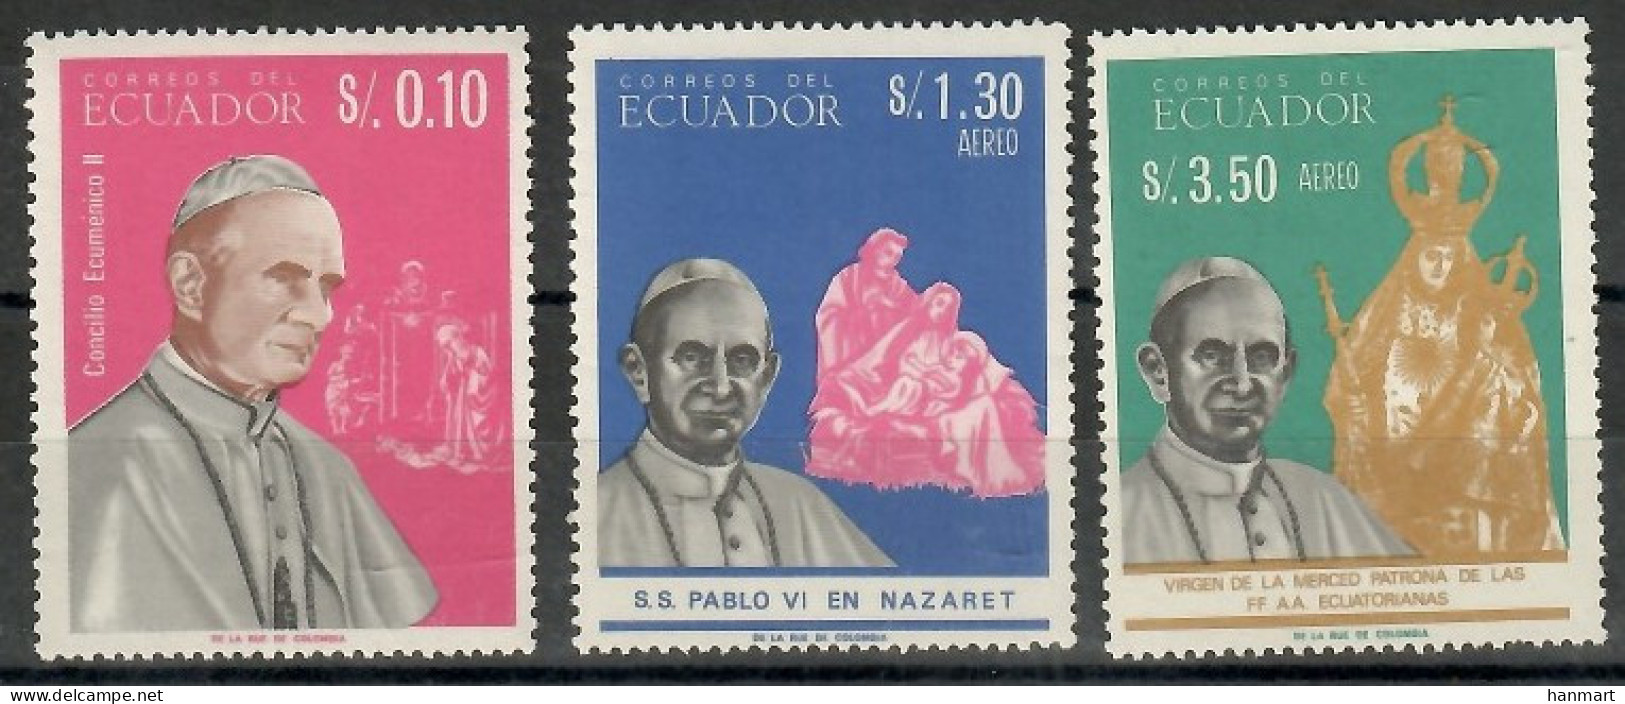 Ecuador 1966 Mi 1242-1244 MNH  (ZS3 ECD1242-1244) - Weihnachten